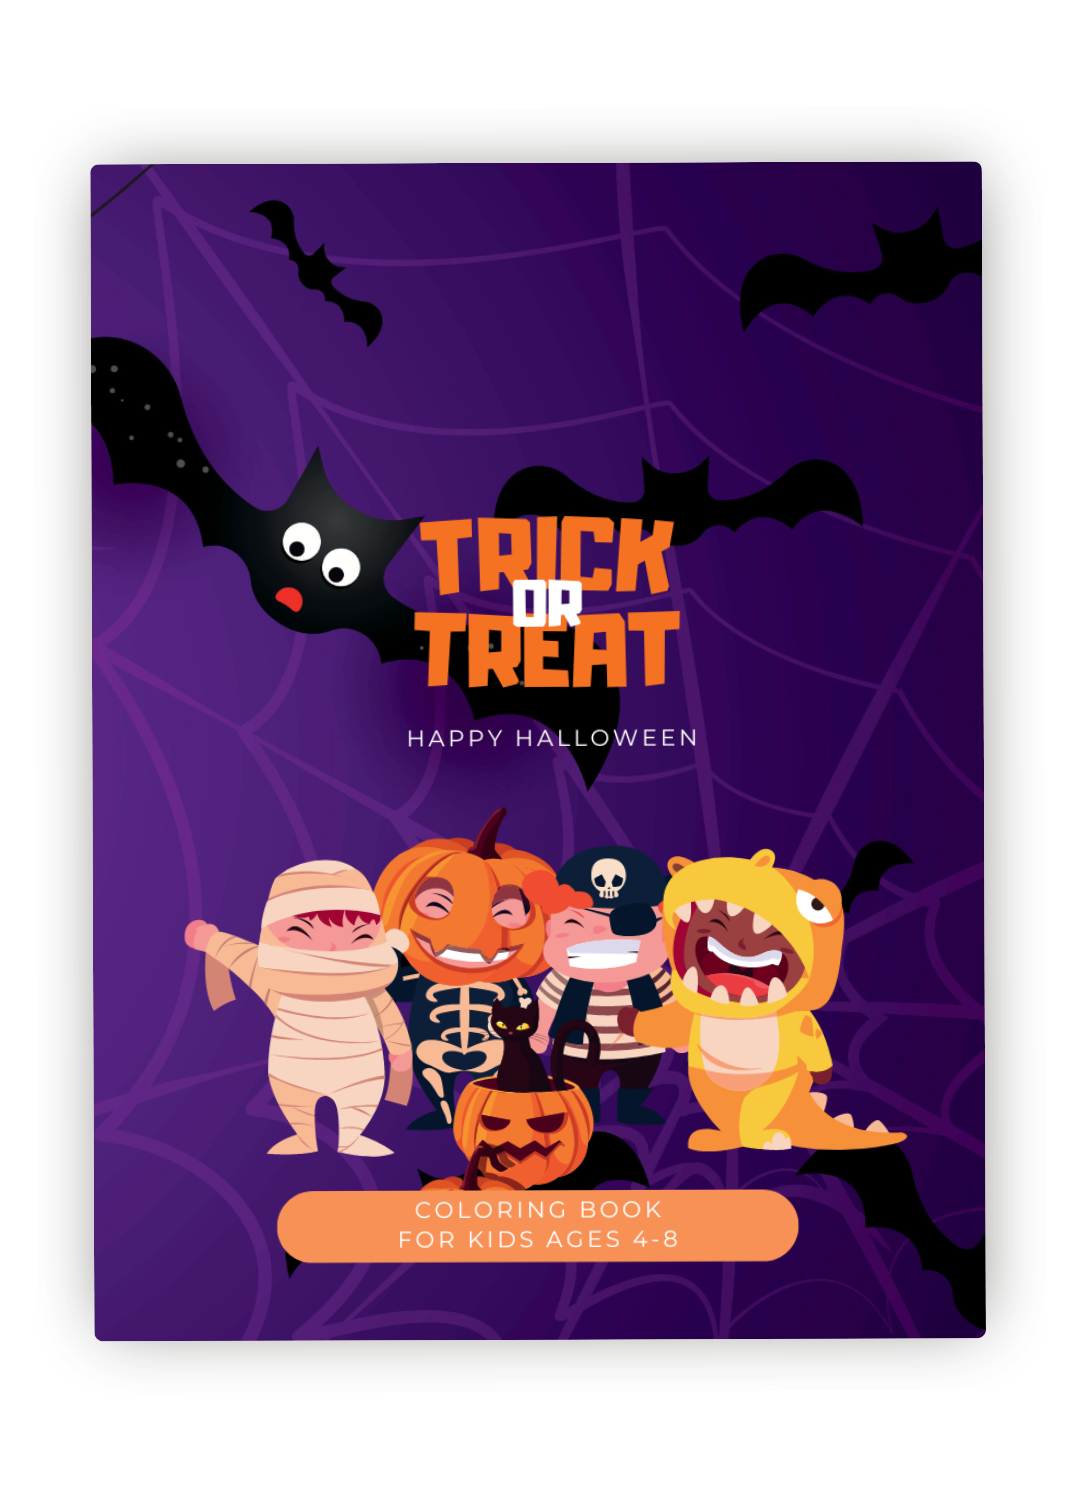 Spooky Adventures: Halloween Coloring Fun for Kids